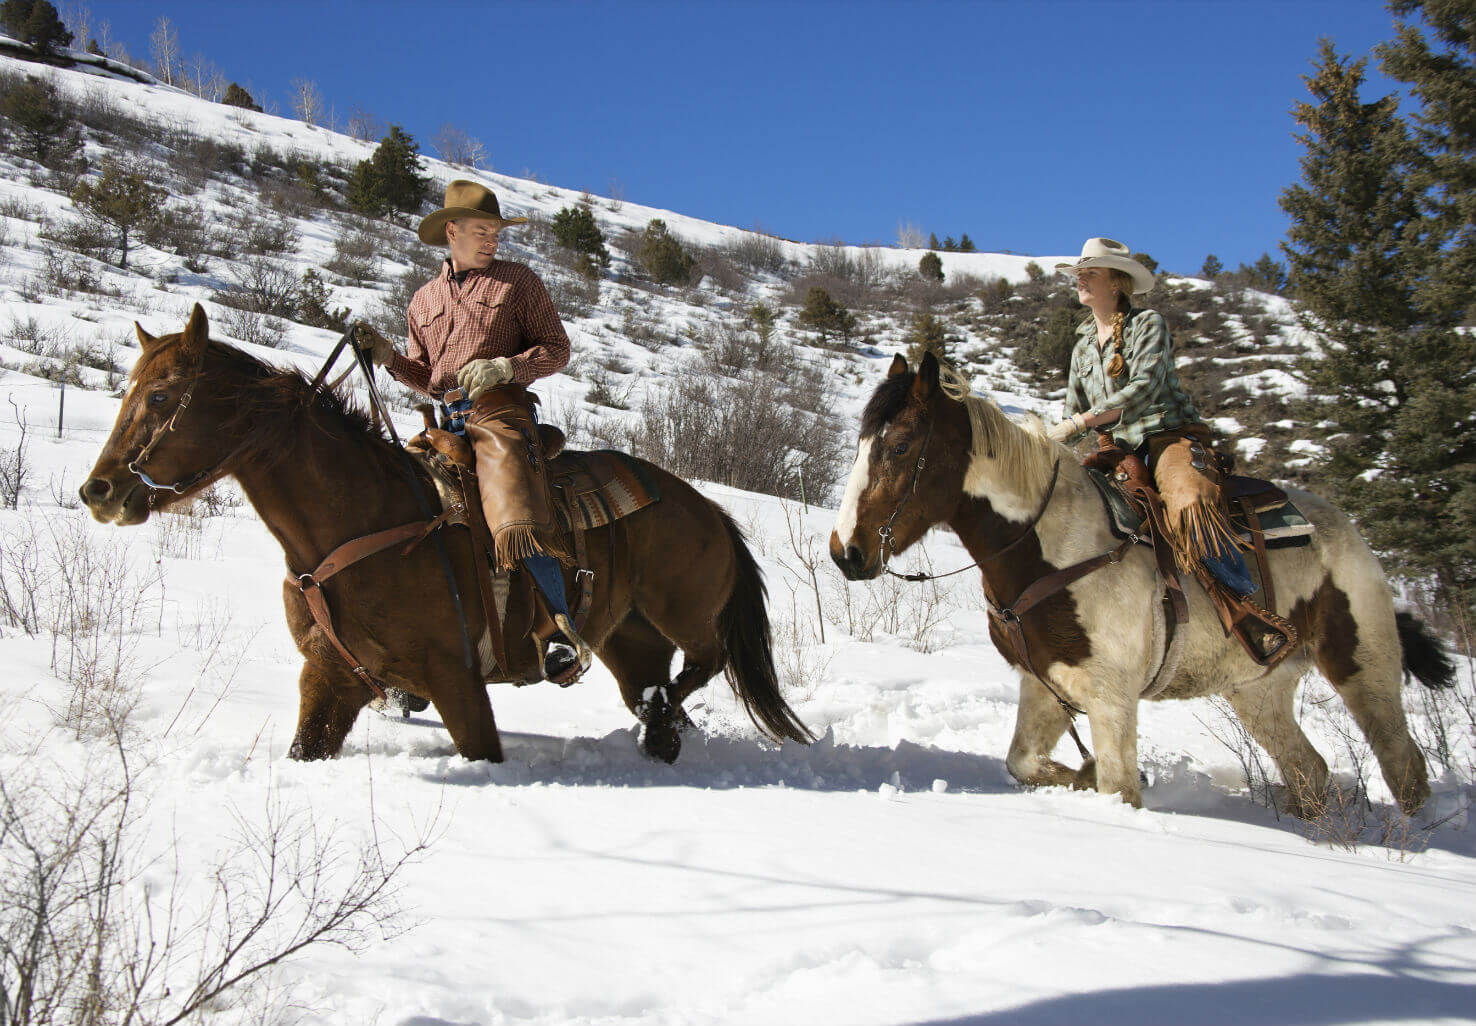 Man and woman riding horses through snow